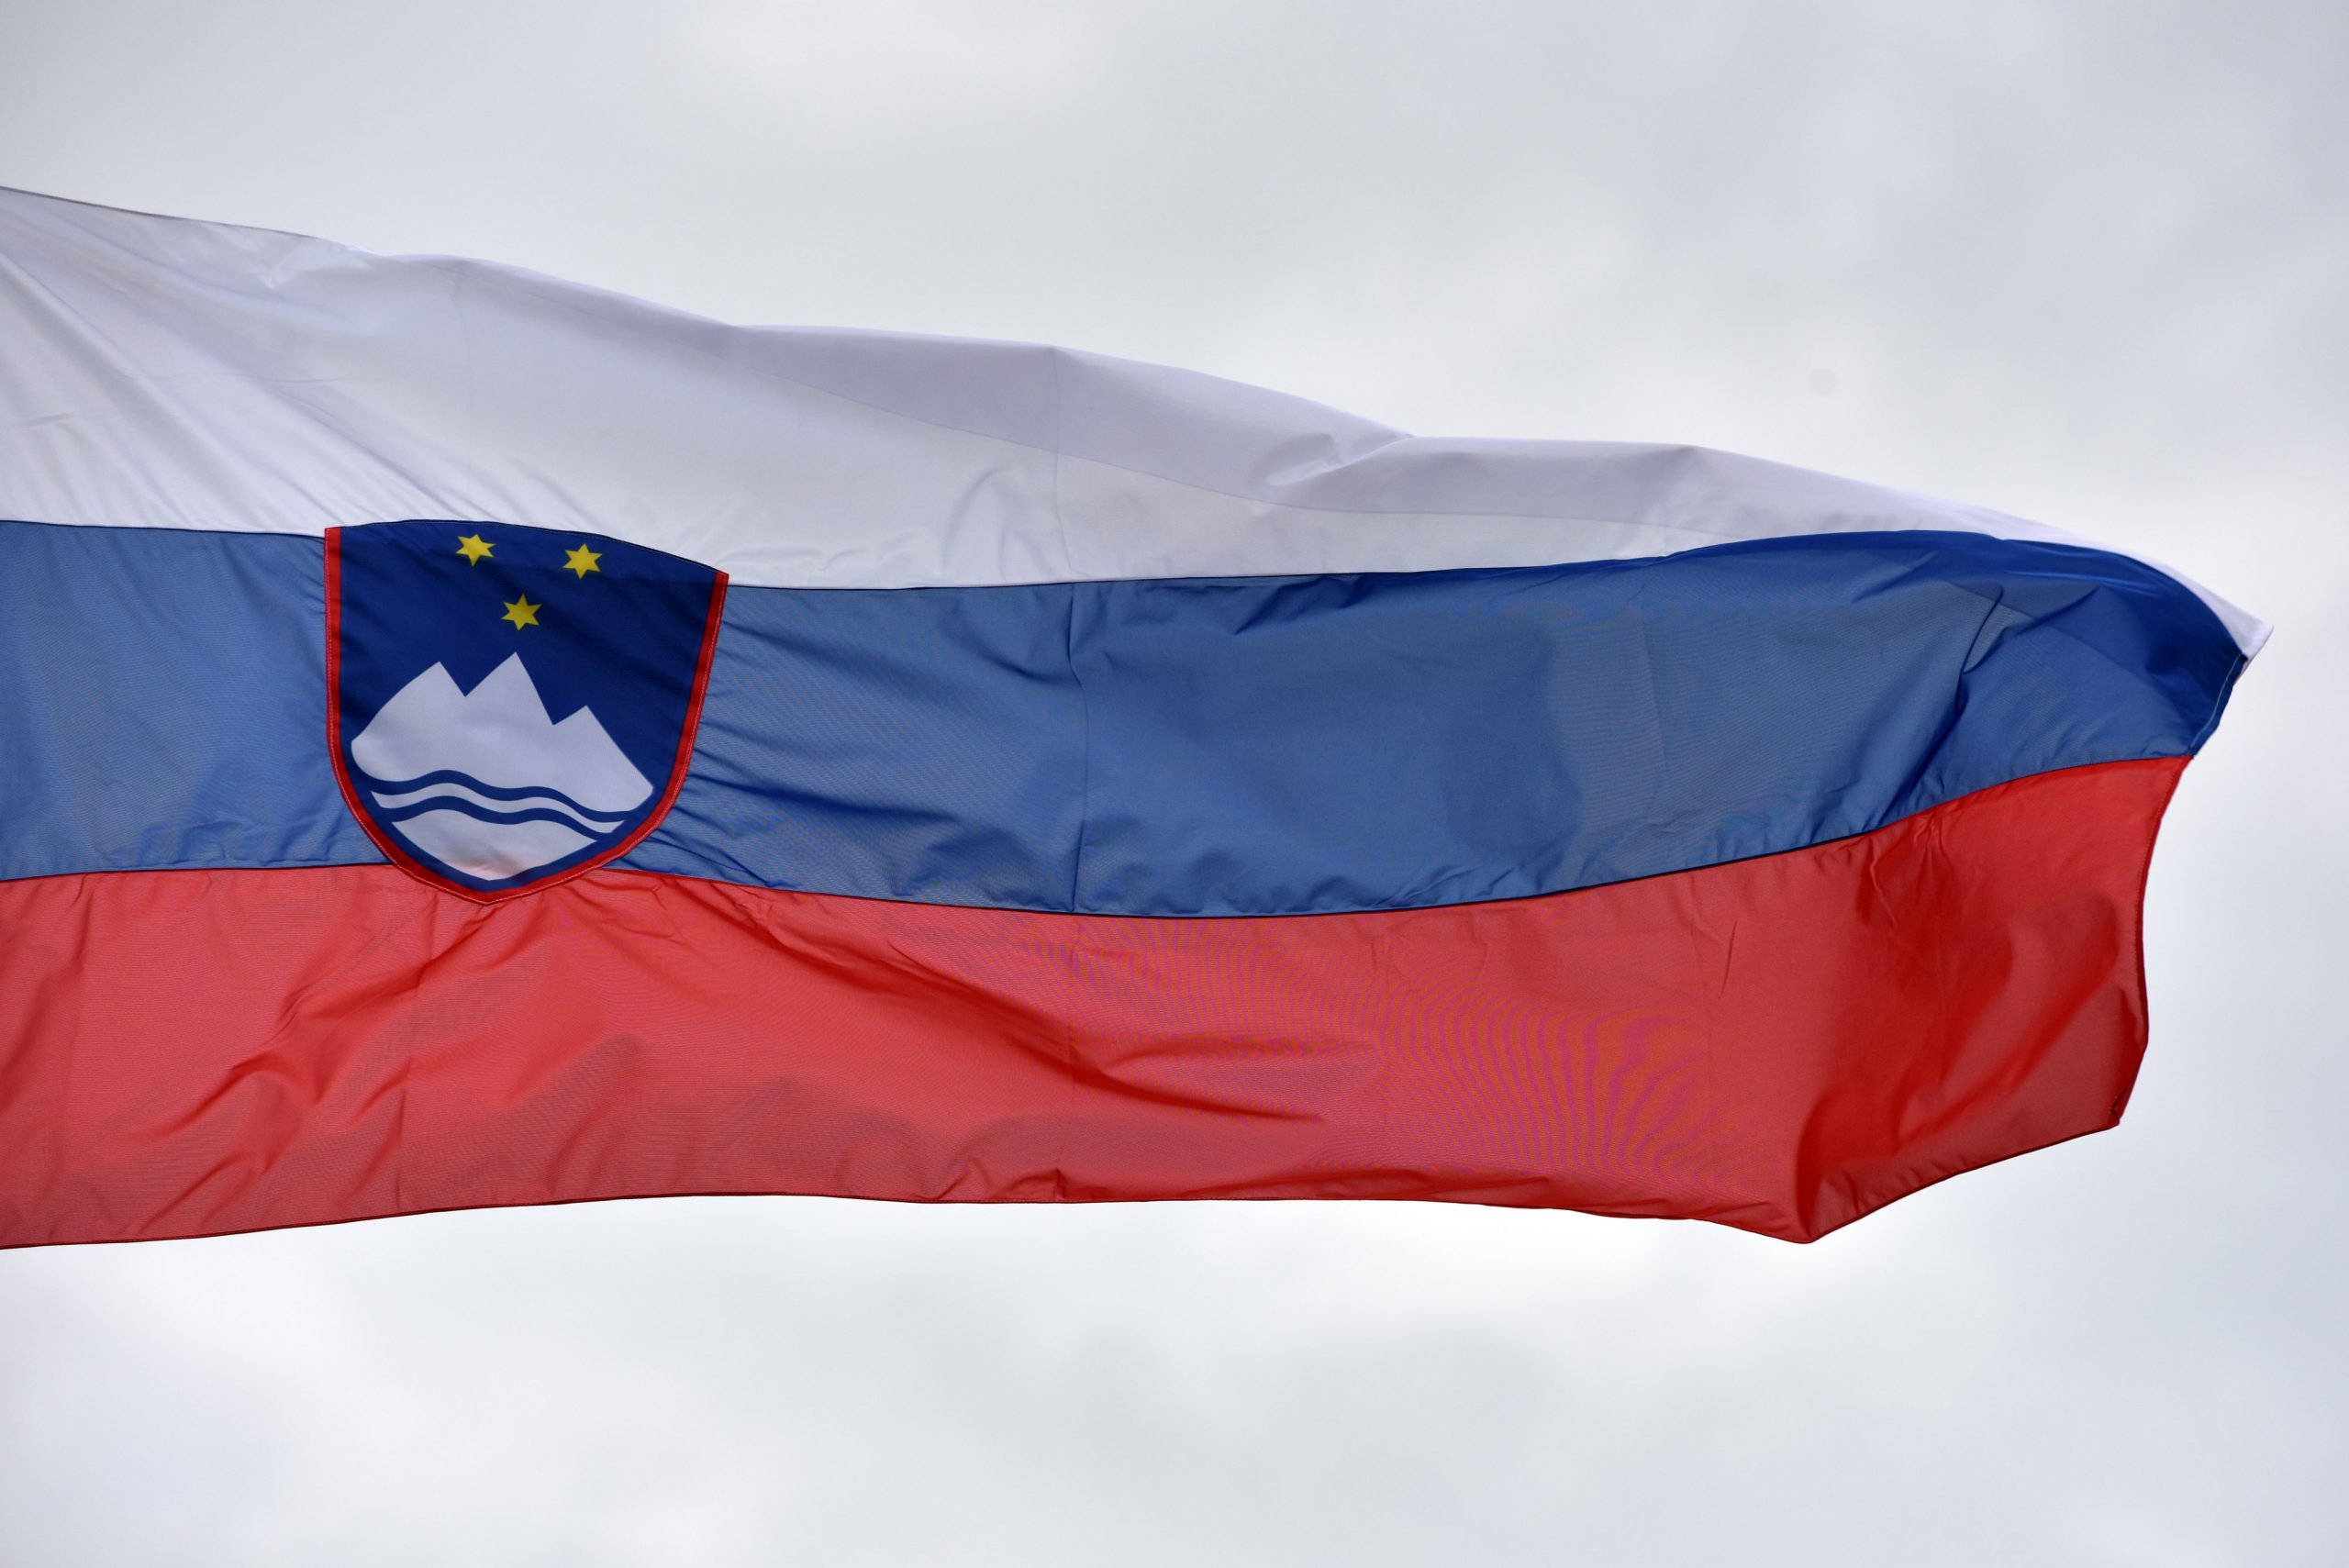 29.05.2019., Sibenik - Drzavna zastava Republike Slovenije.
Photo: Hrvoje Jelavic/PIXSELL